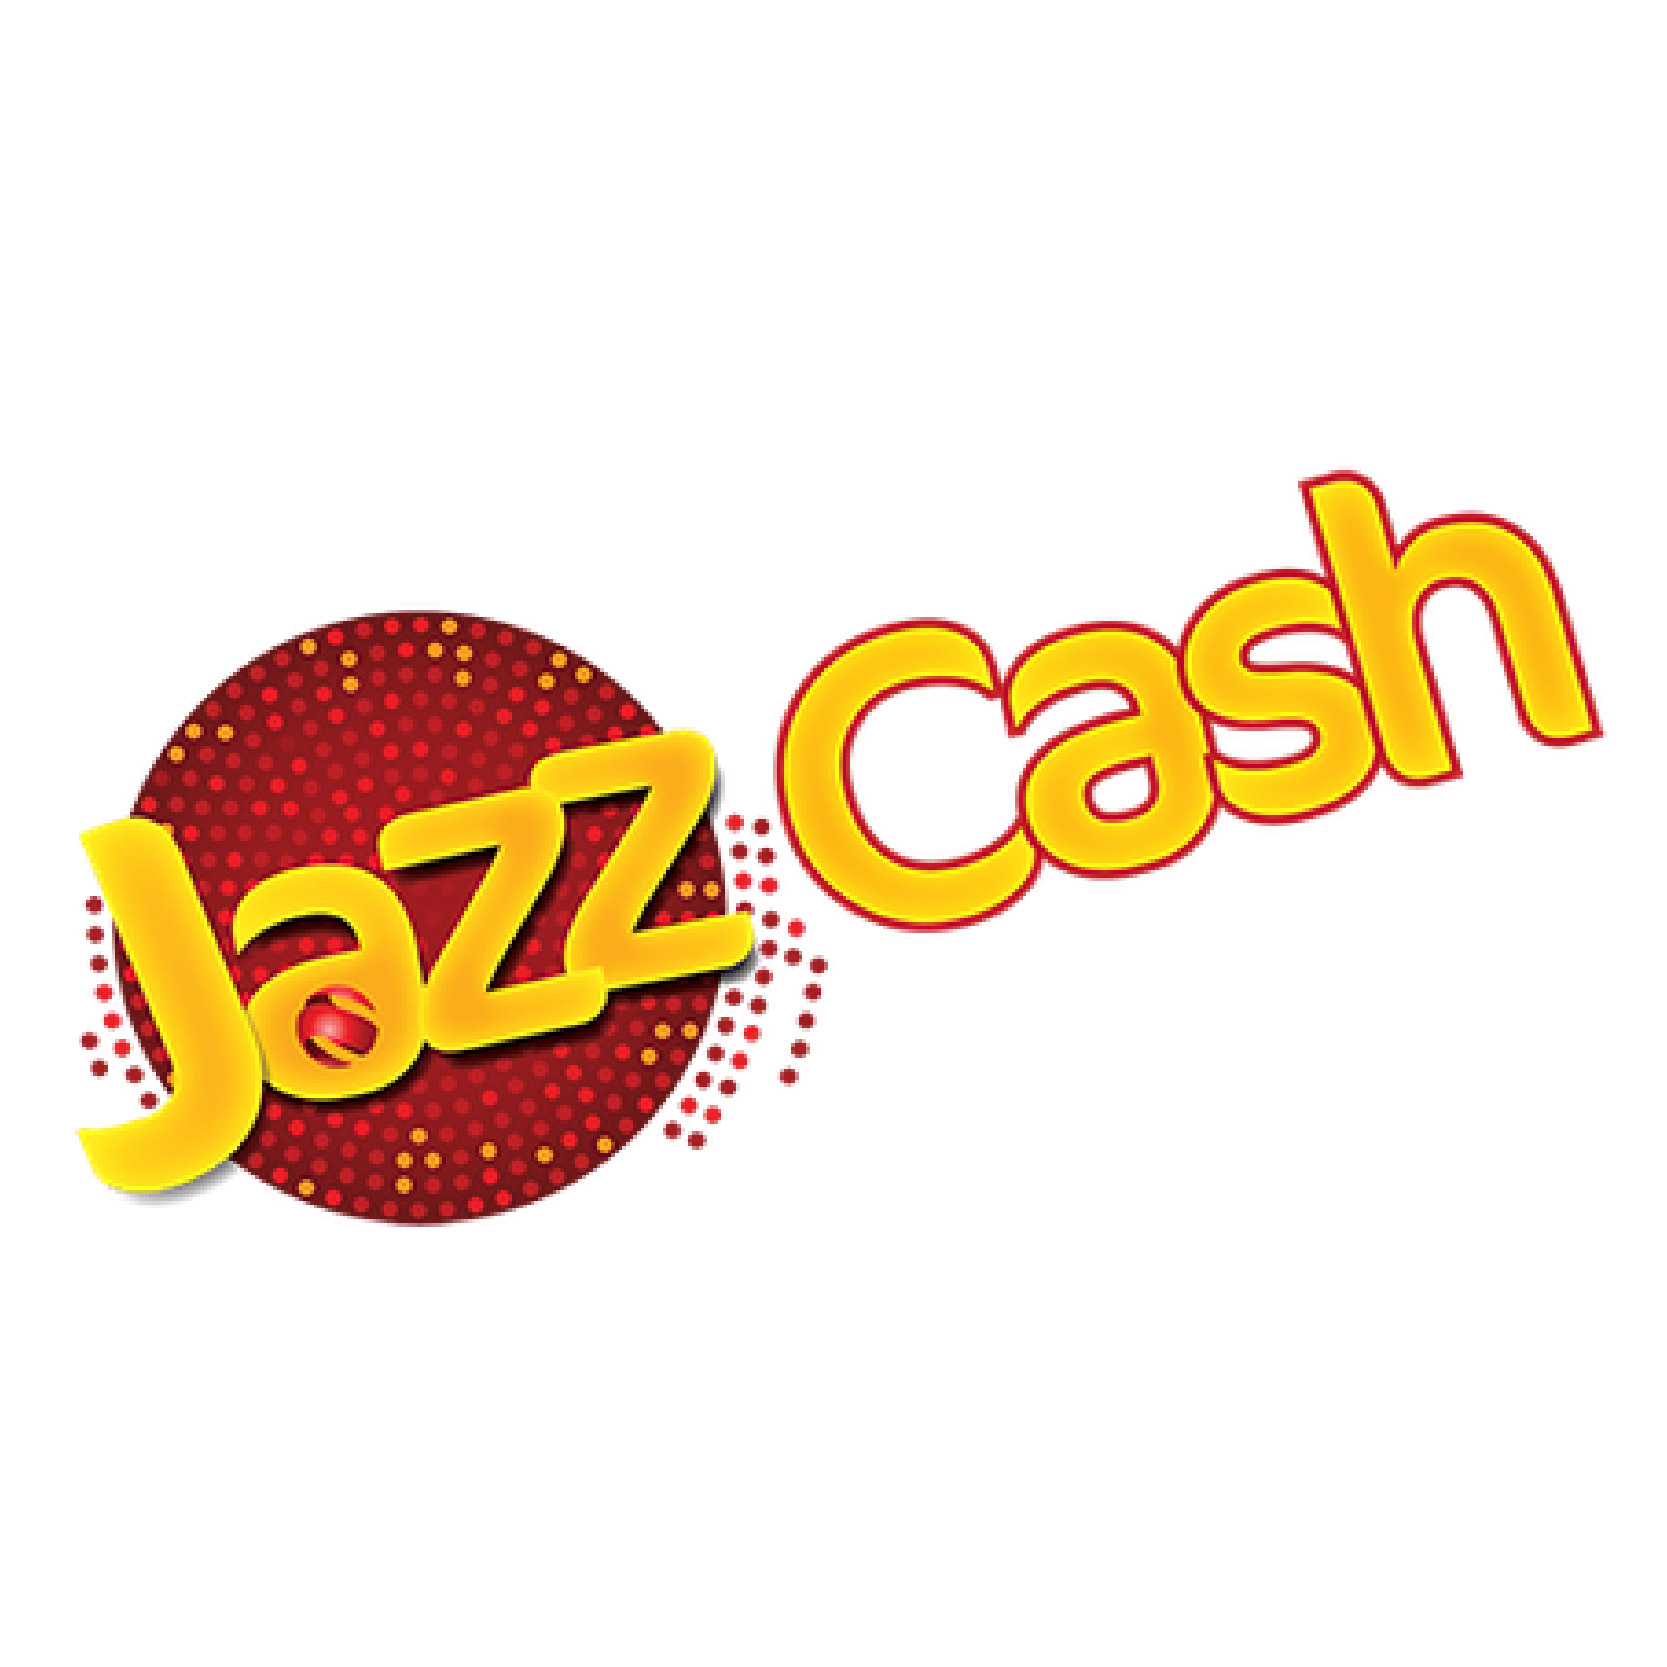 JazzCash-01